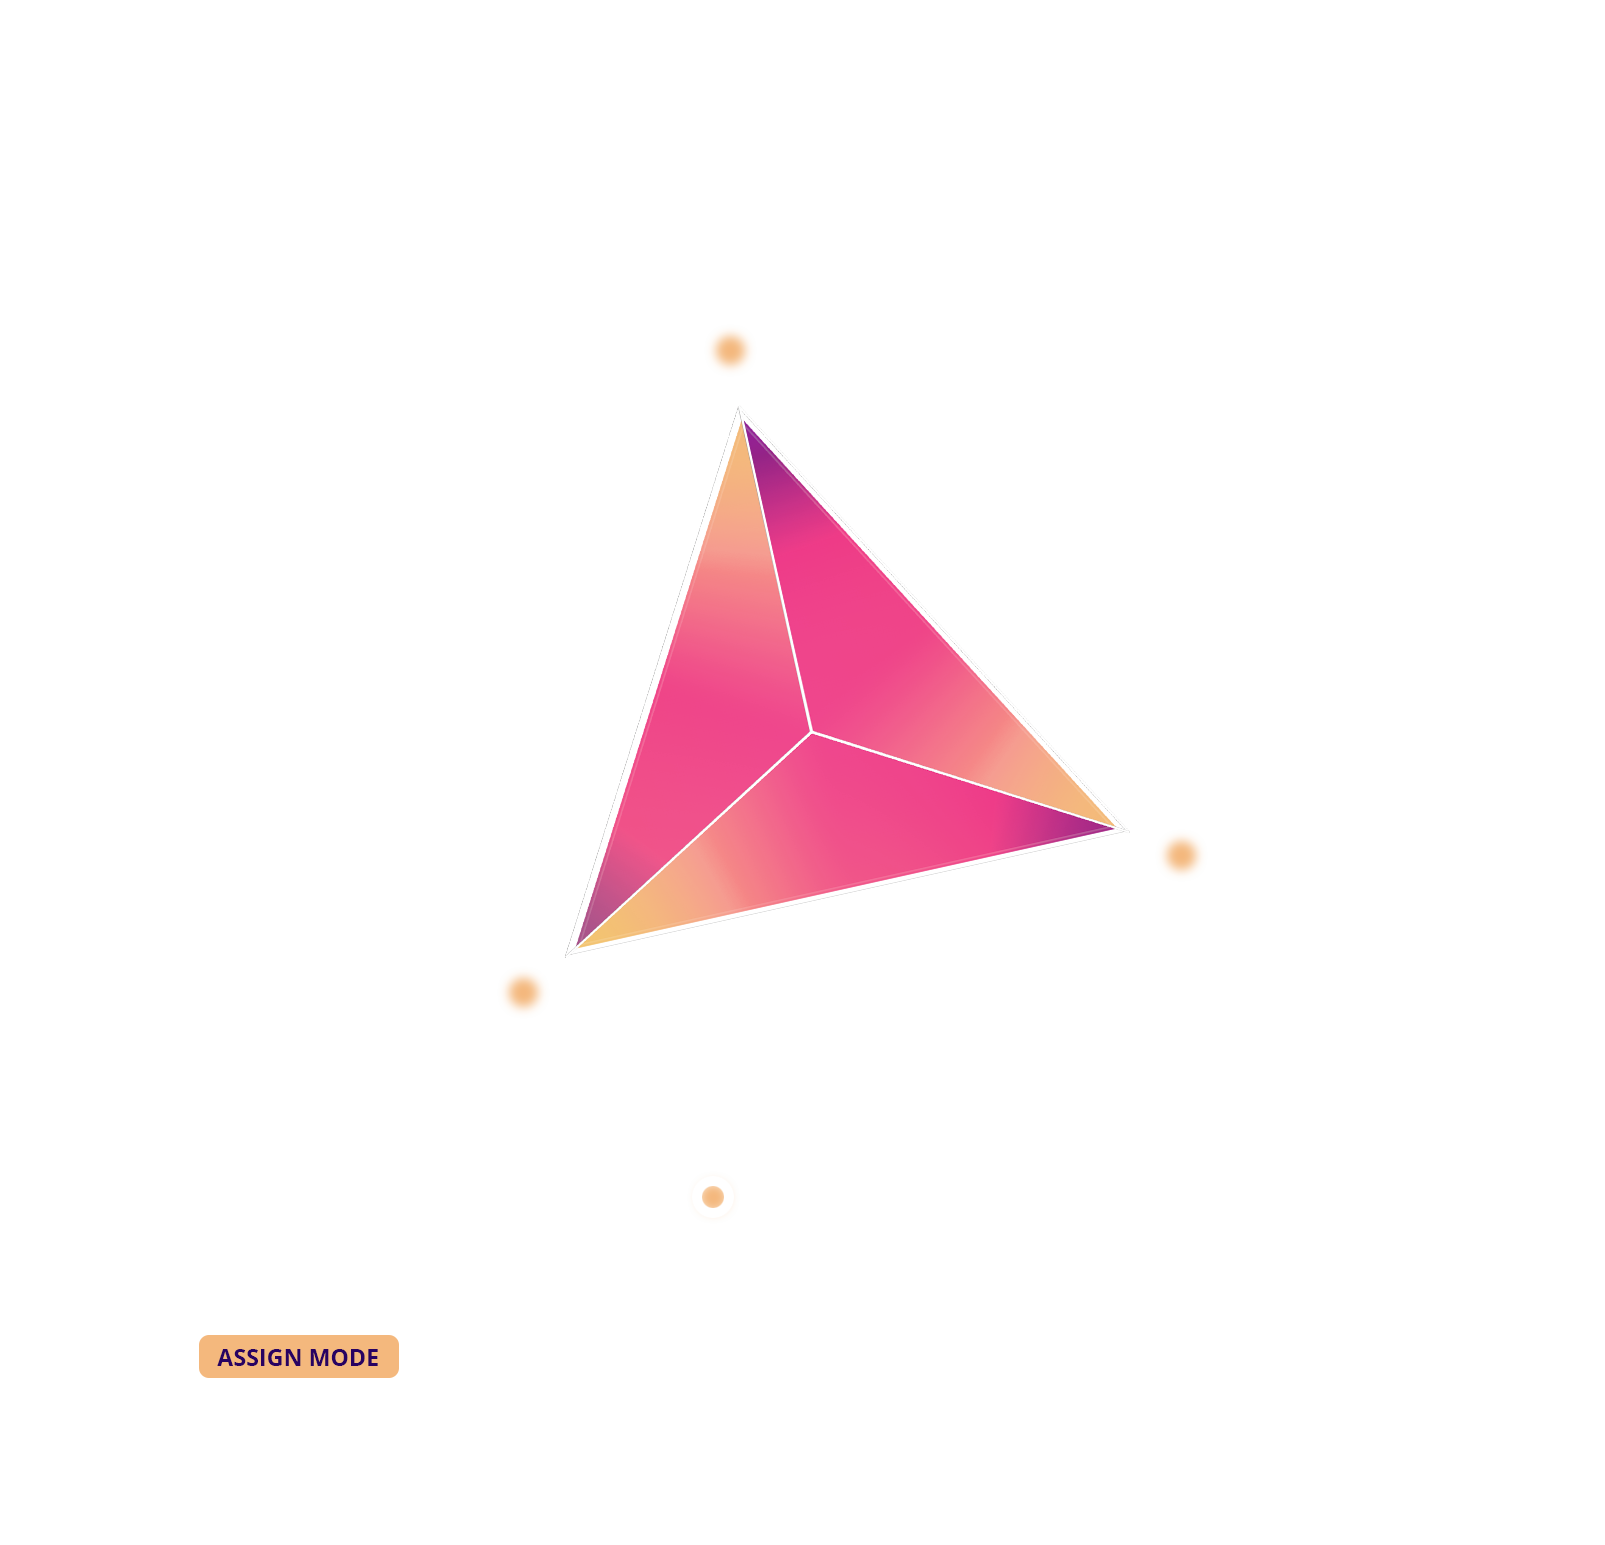 PRISM interface